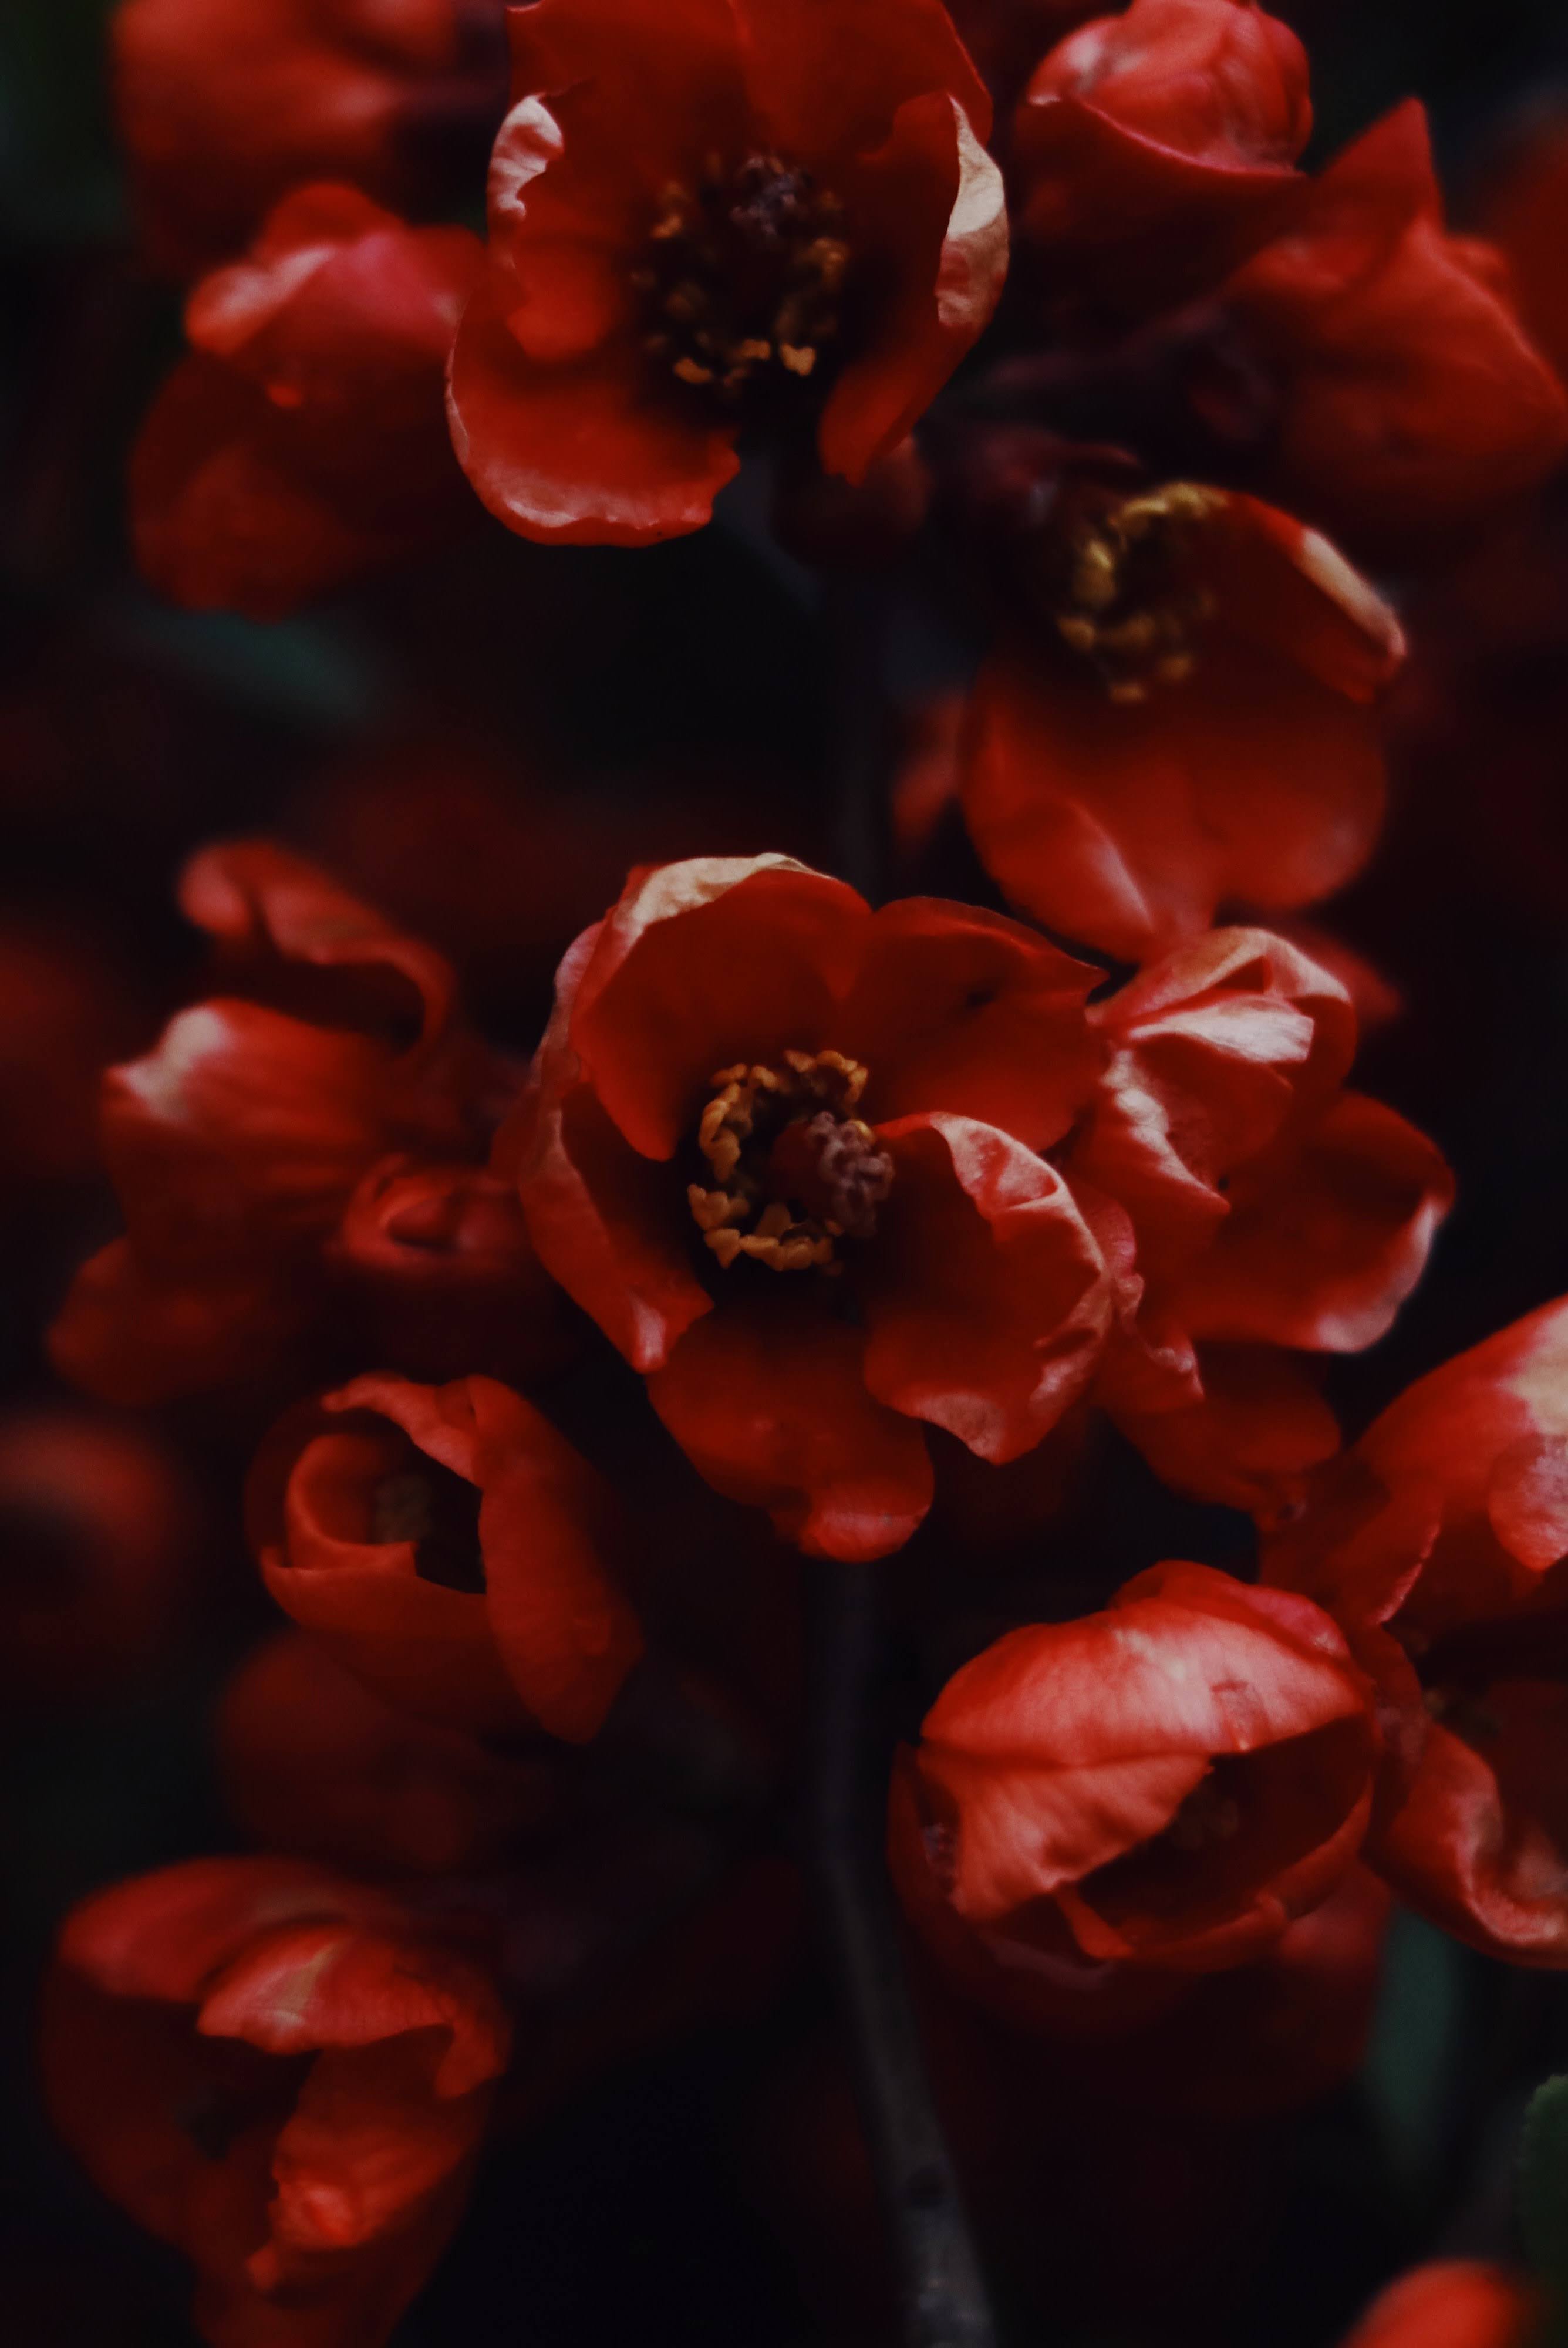 Red Flower in Macro | Photo by Jessica Delp via Unsplash